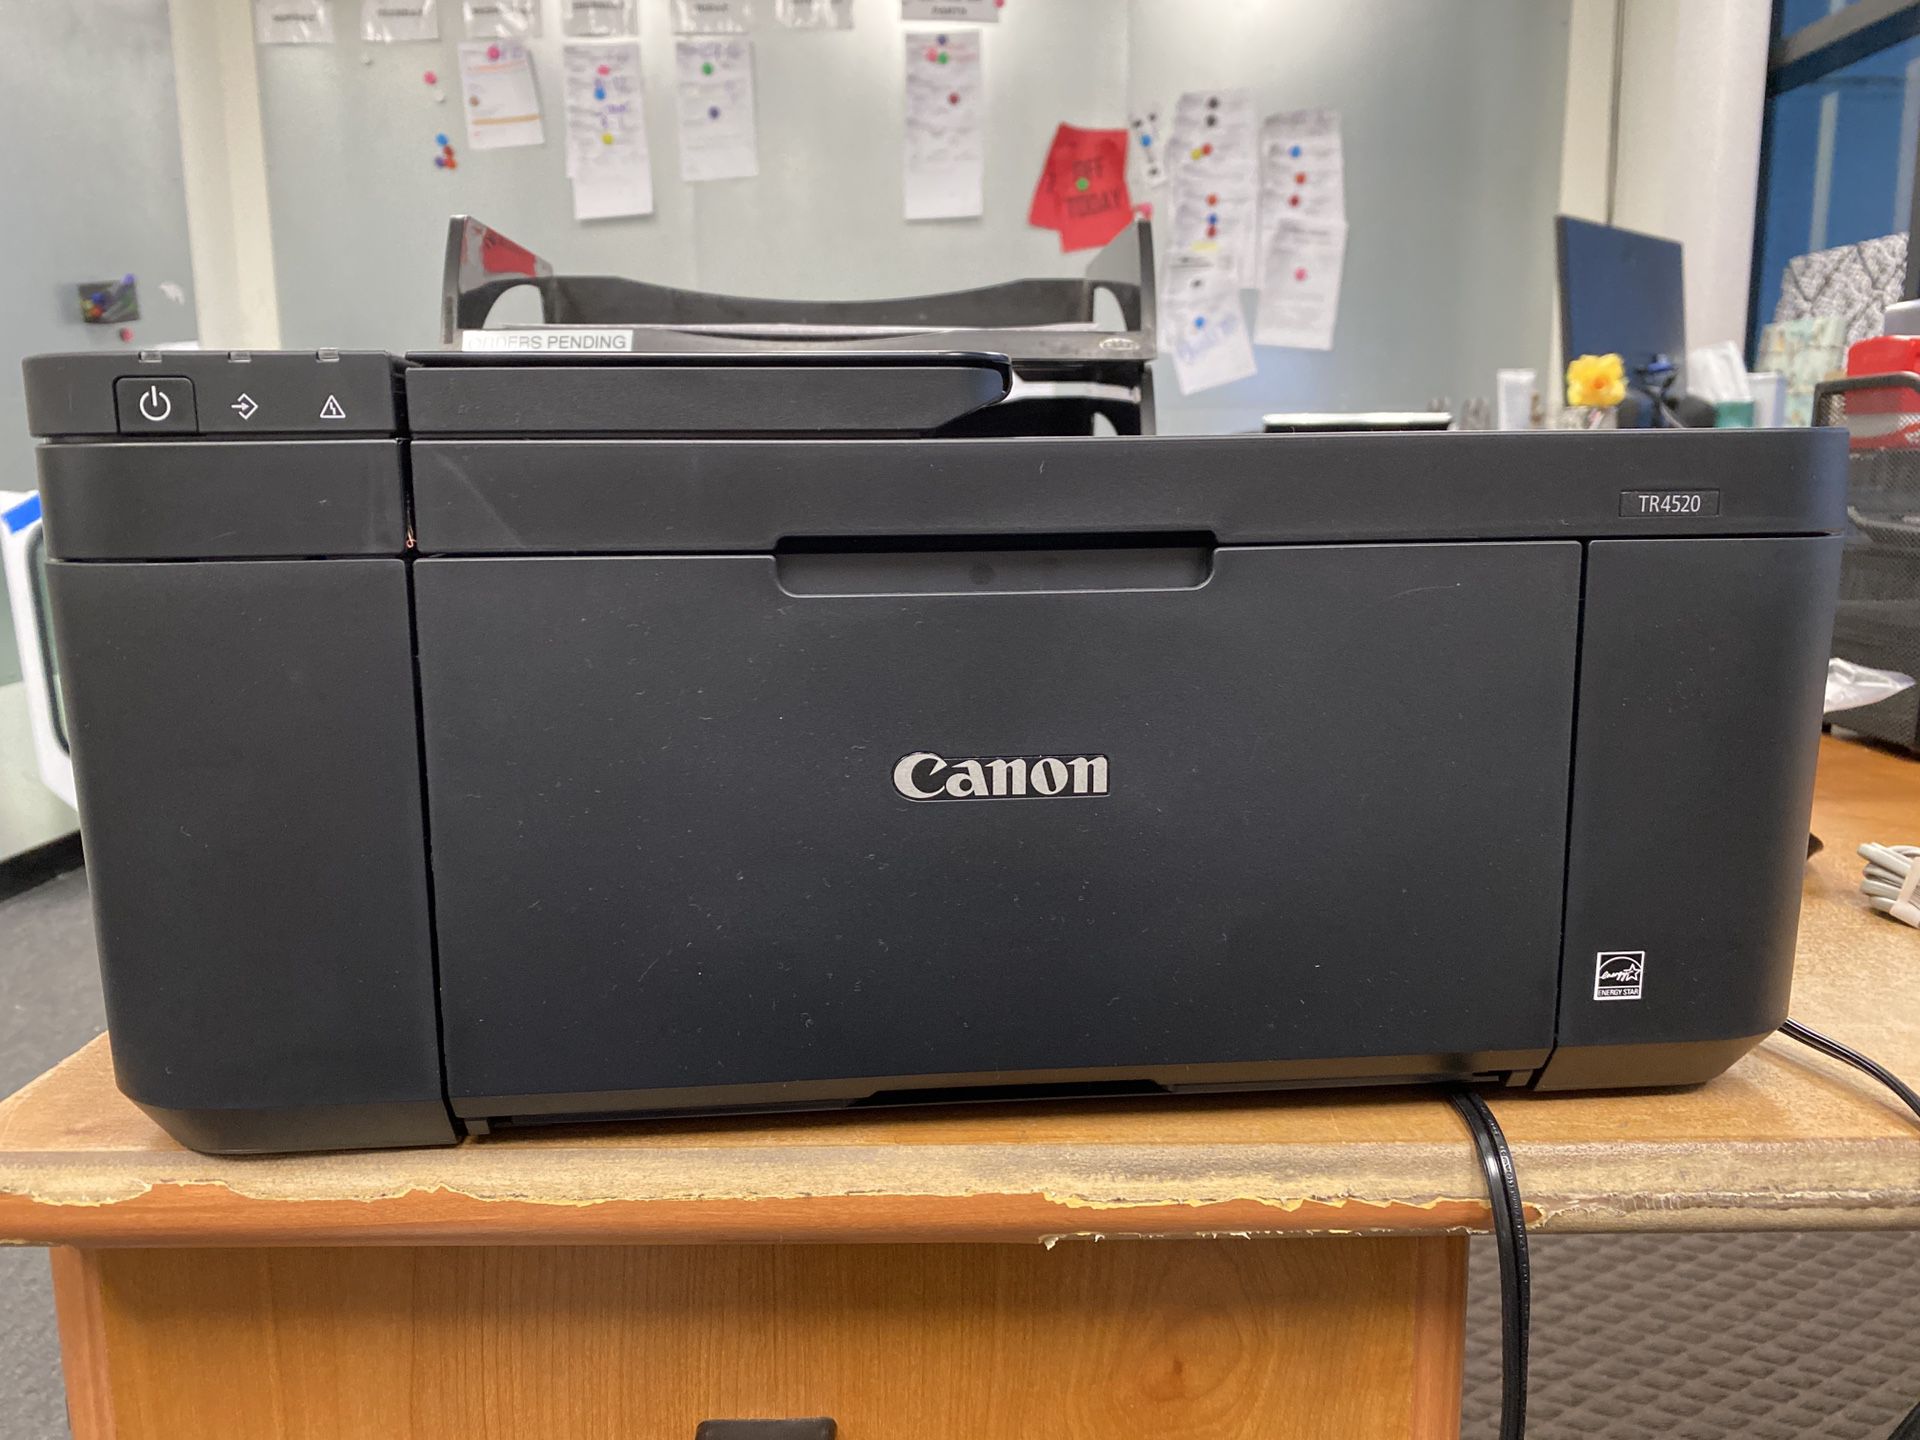 Canon TR4520 printer